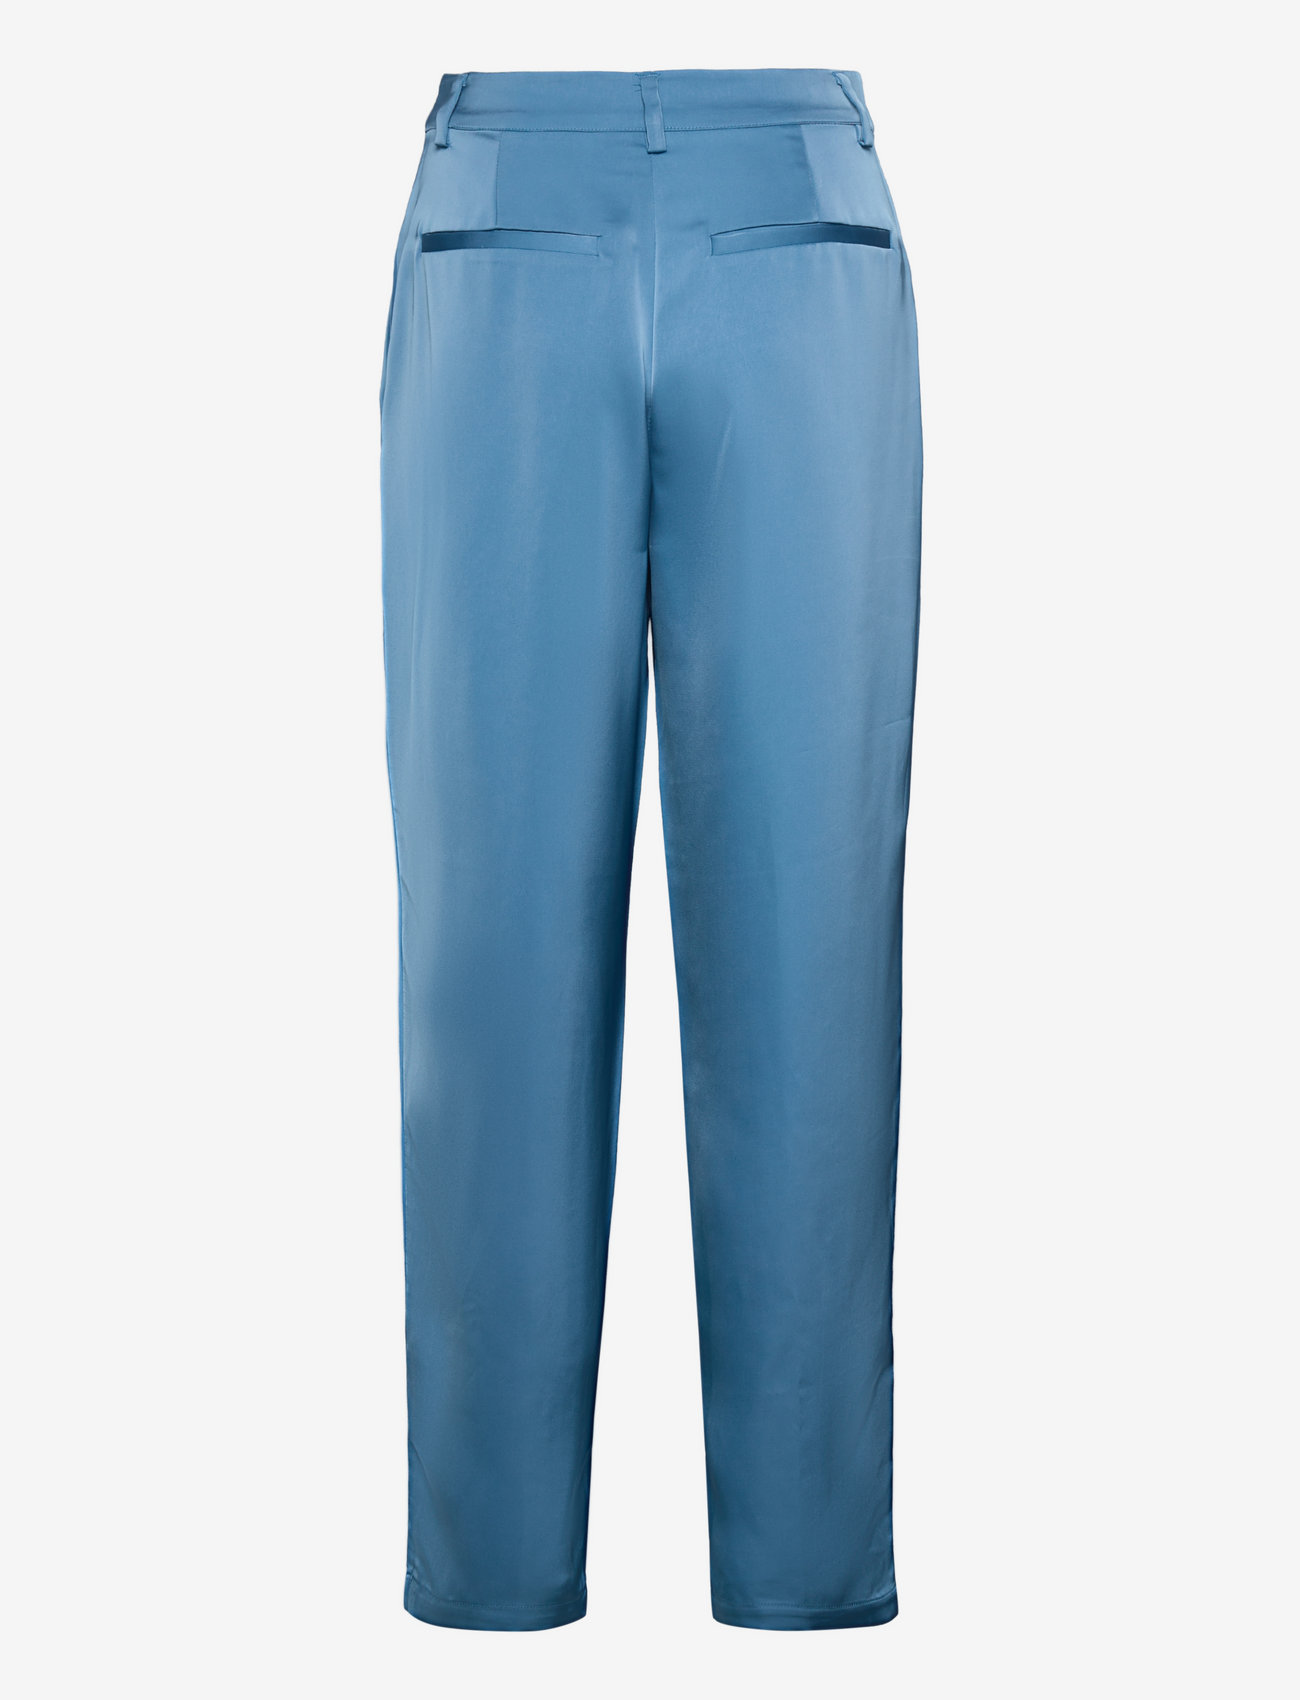 bzr - Satulla Dollar pants - dressbukser - ocean blue - 1